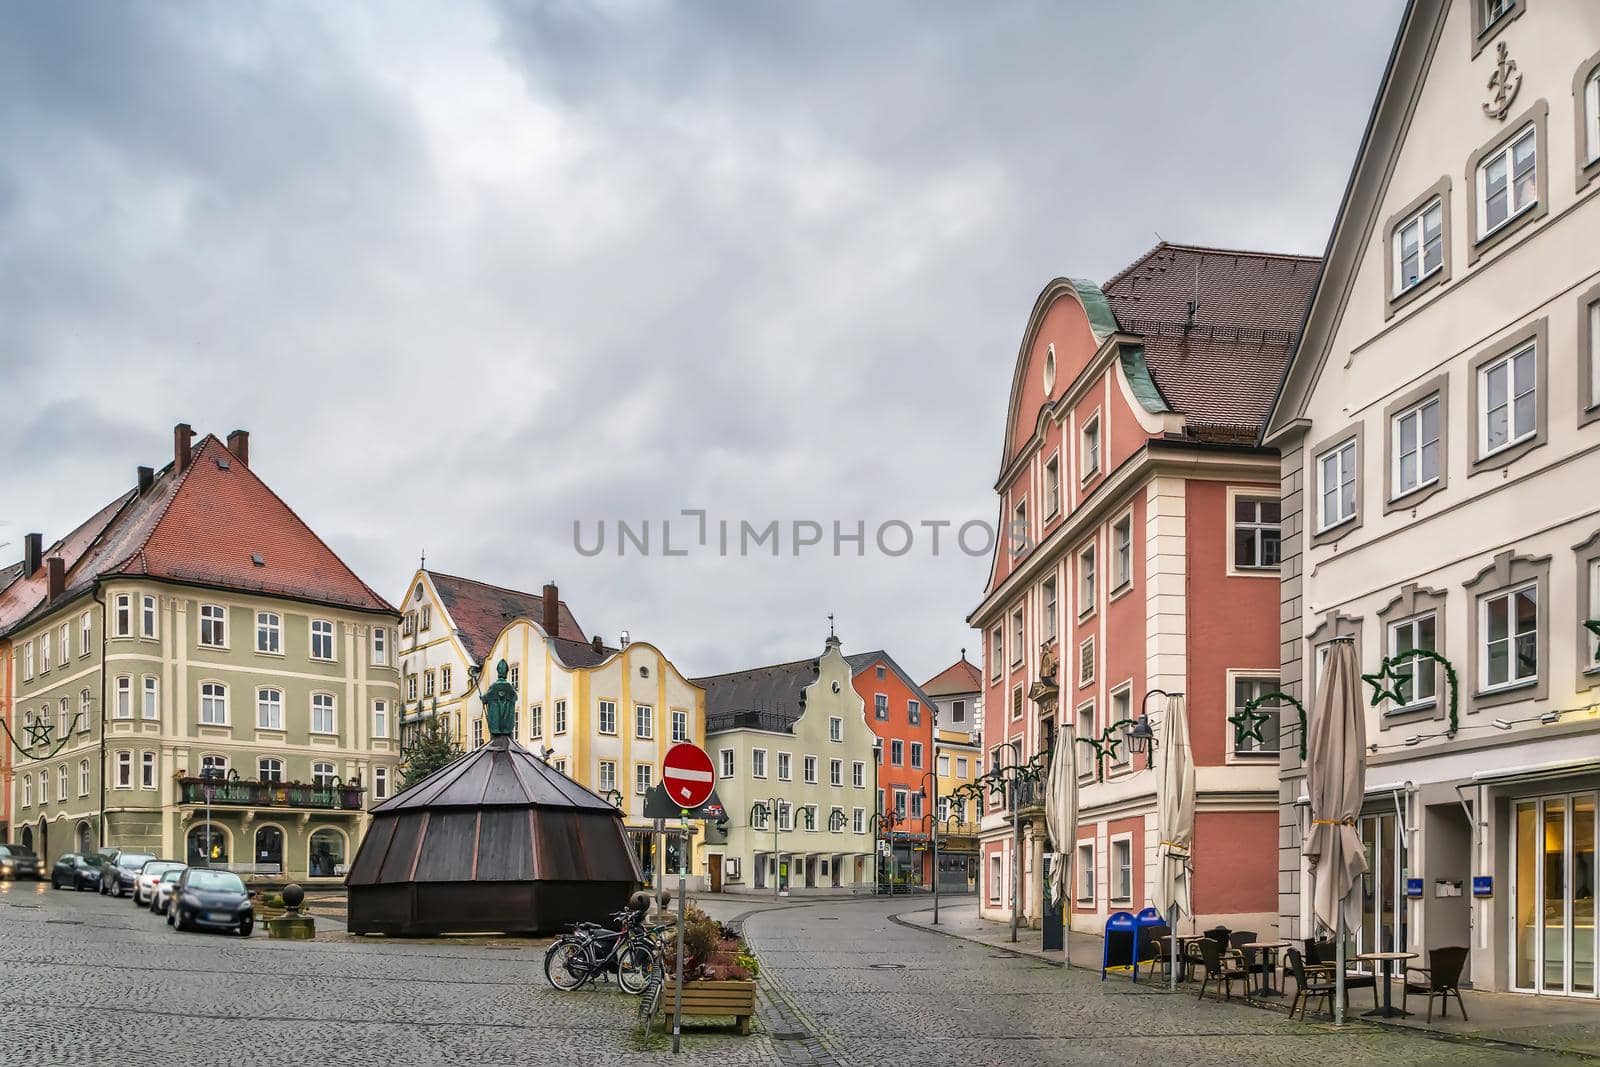 Main square in Eichstatt, Germany by borisb17